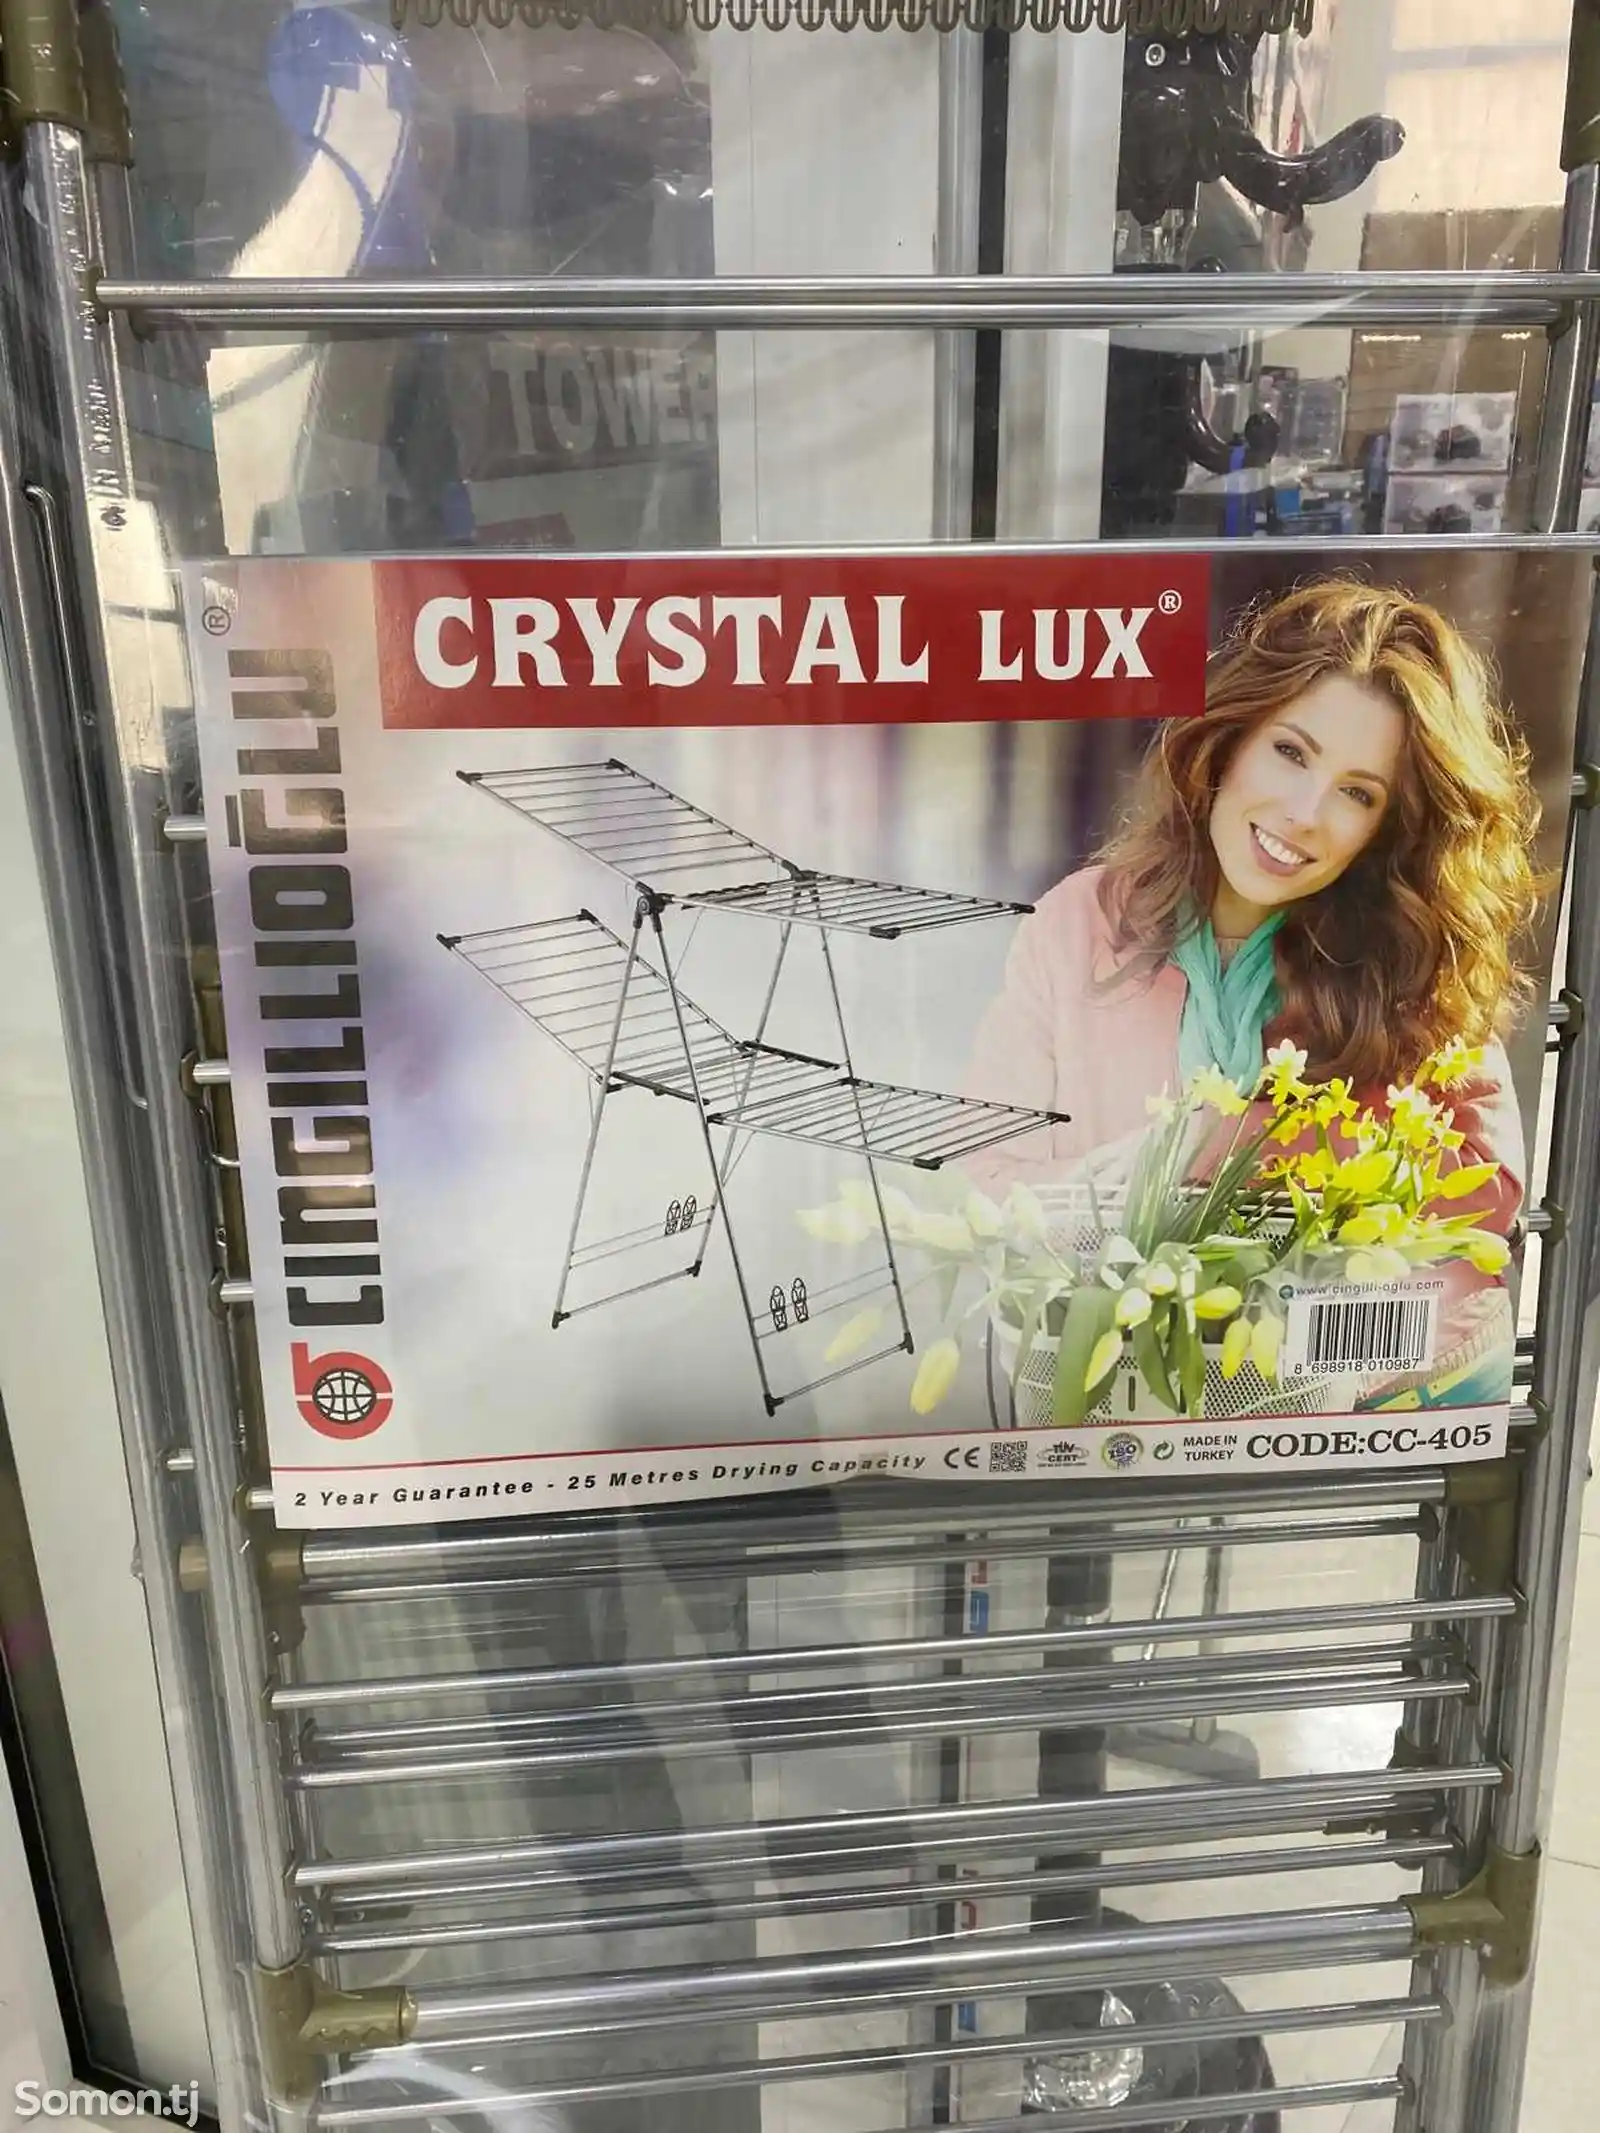 Сушилка Crystal lux 405-3